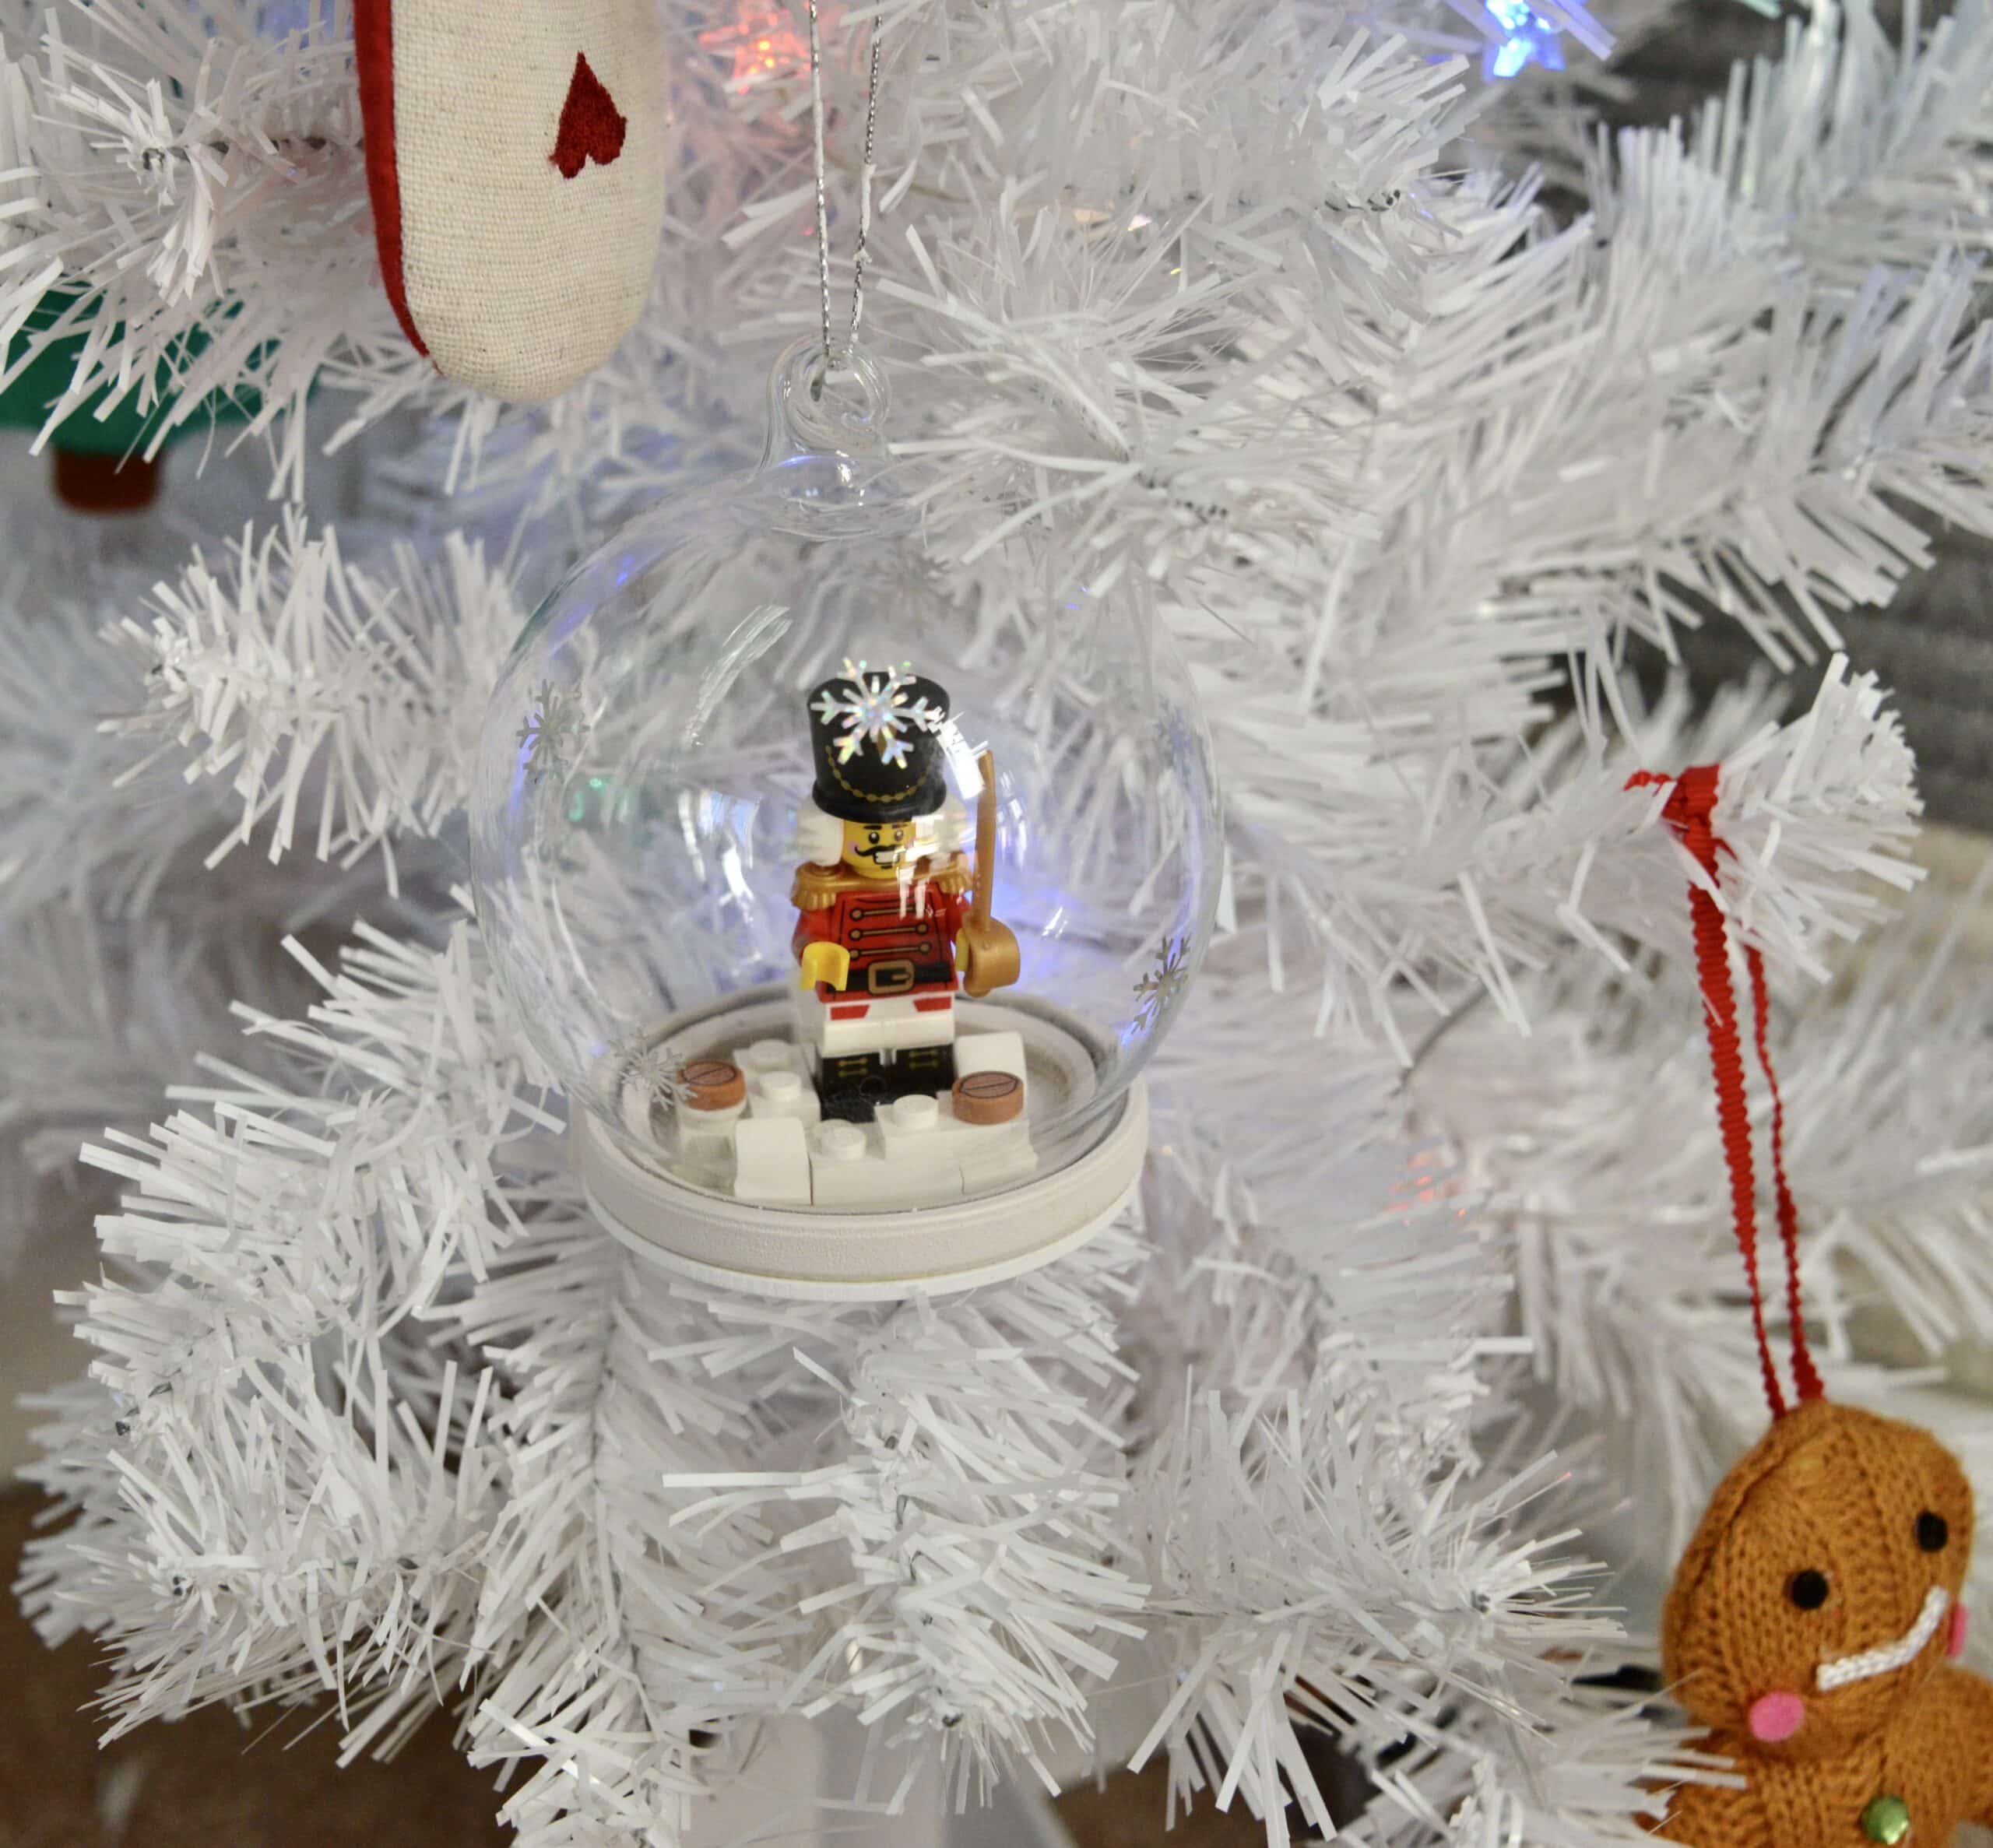 DIY LEGO snow globe tree decoration with a nutcracker figure inside